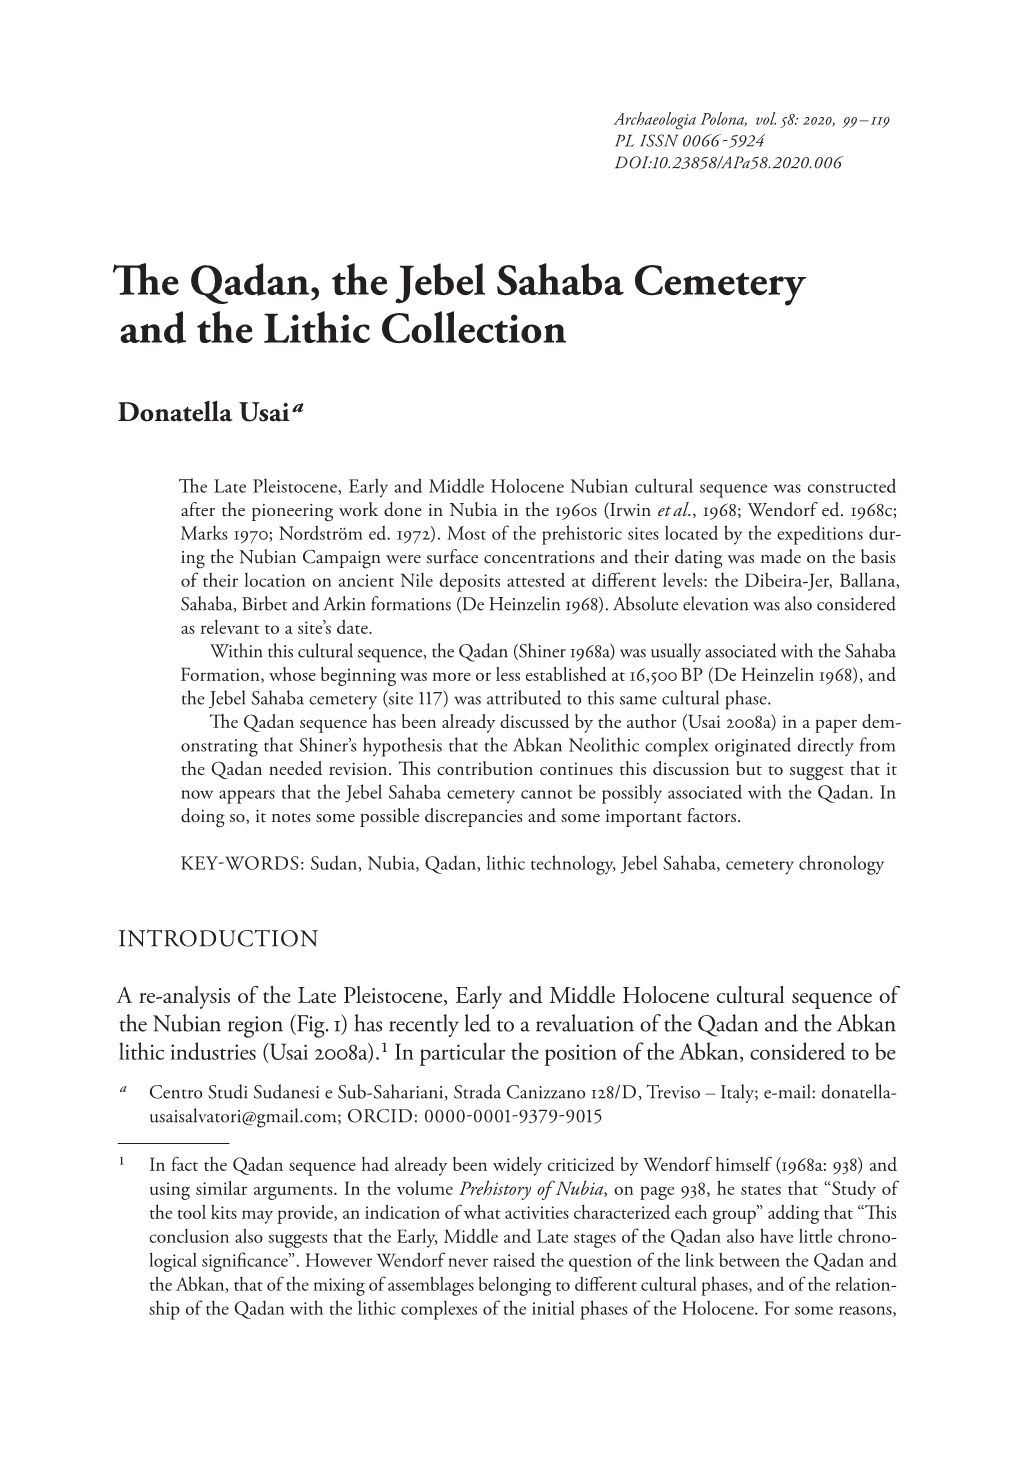 Archaeologia Polona, Vol. 58: 2020, the Qadan, the Jebel Sahaba